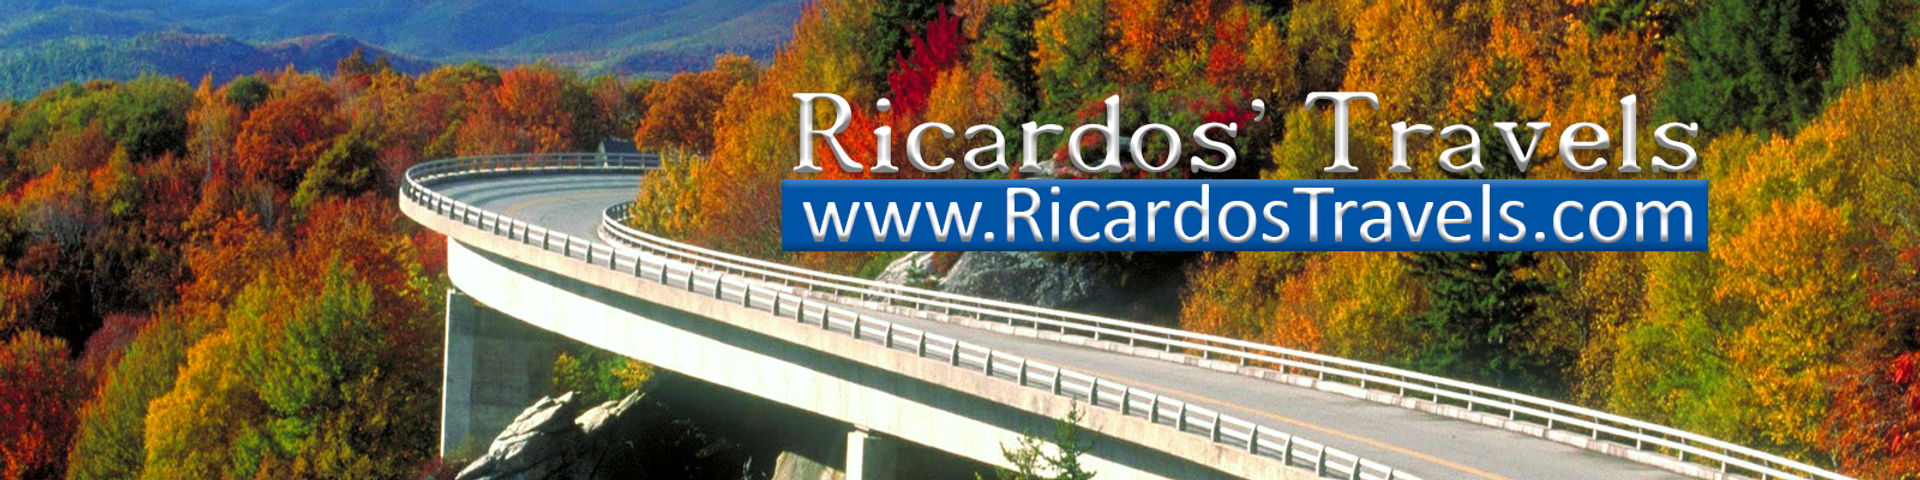 Ricardos Travels Banner 1 Blueridge Mountains